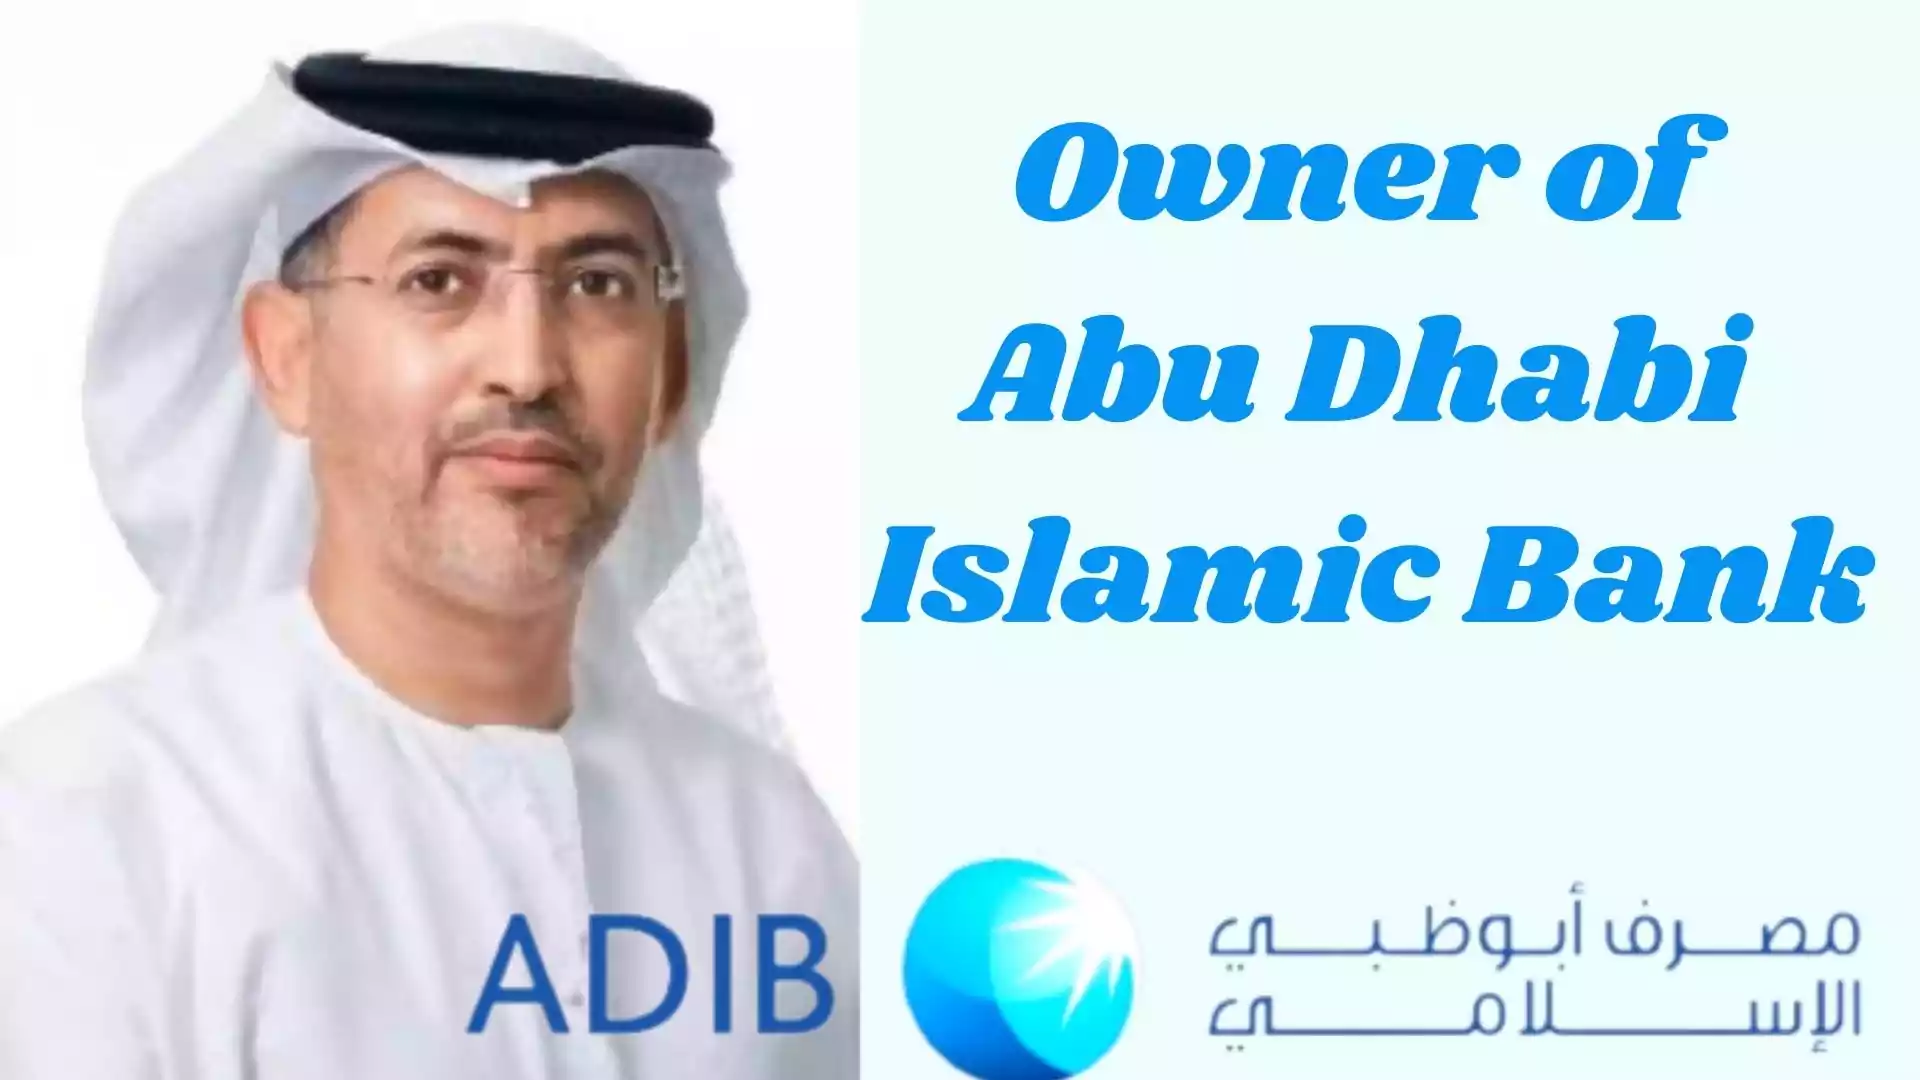 Who is the owner of Abu Dhabi Islamic Bank Wiki Jawaan Awaidha Suhail Al-Khaili Image